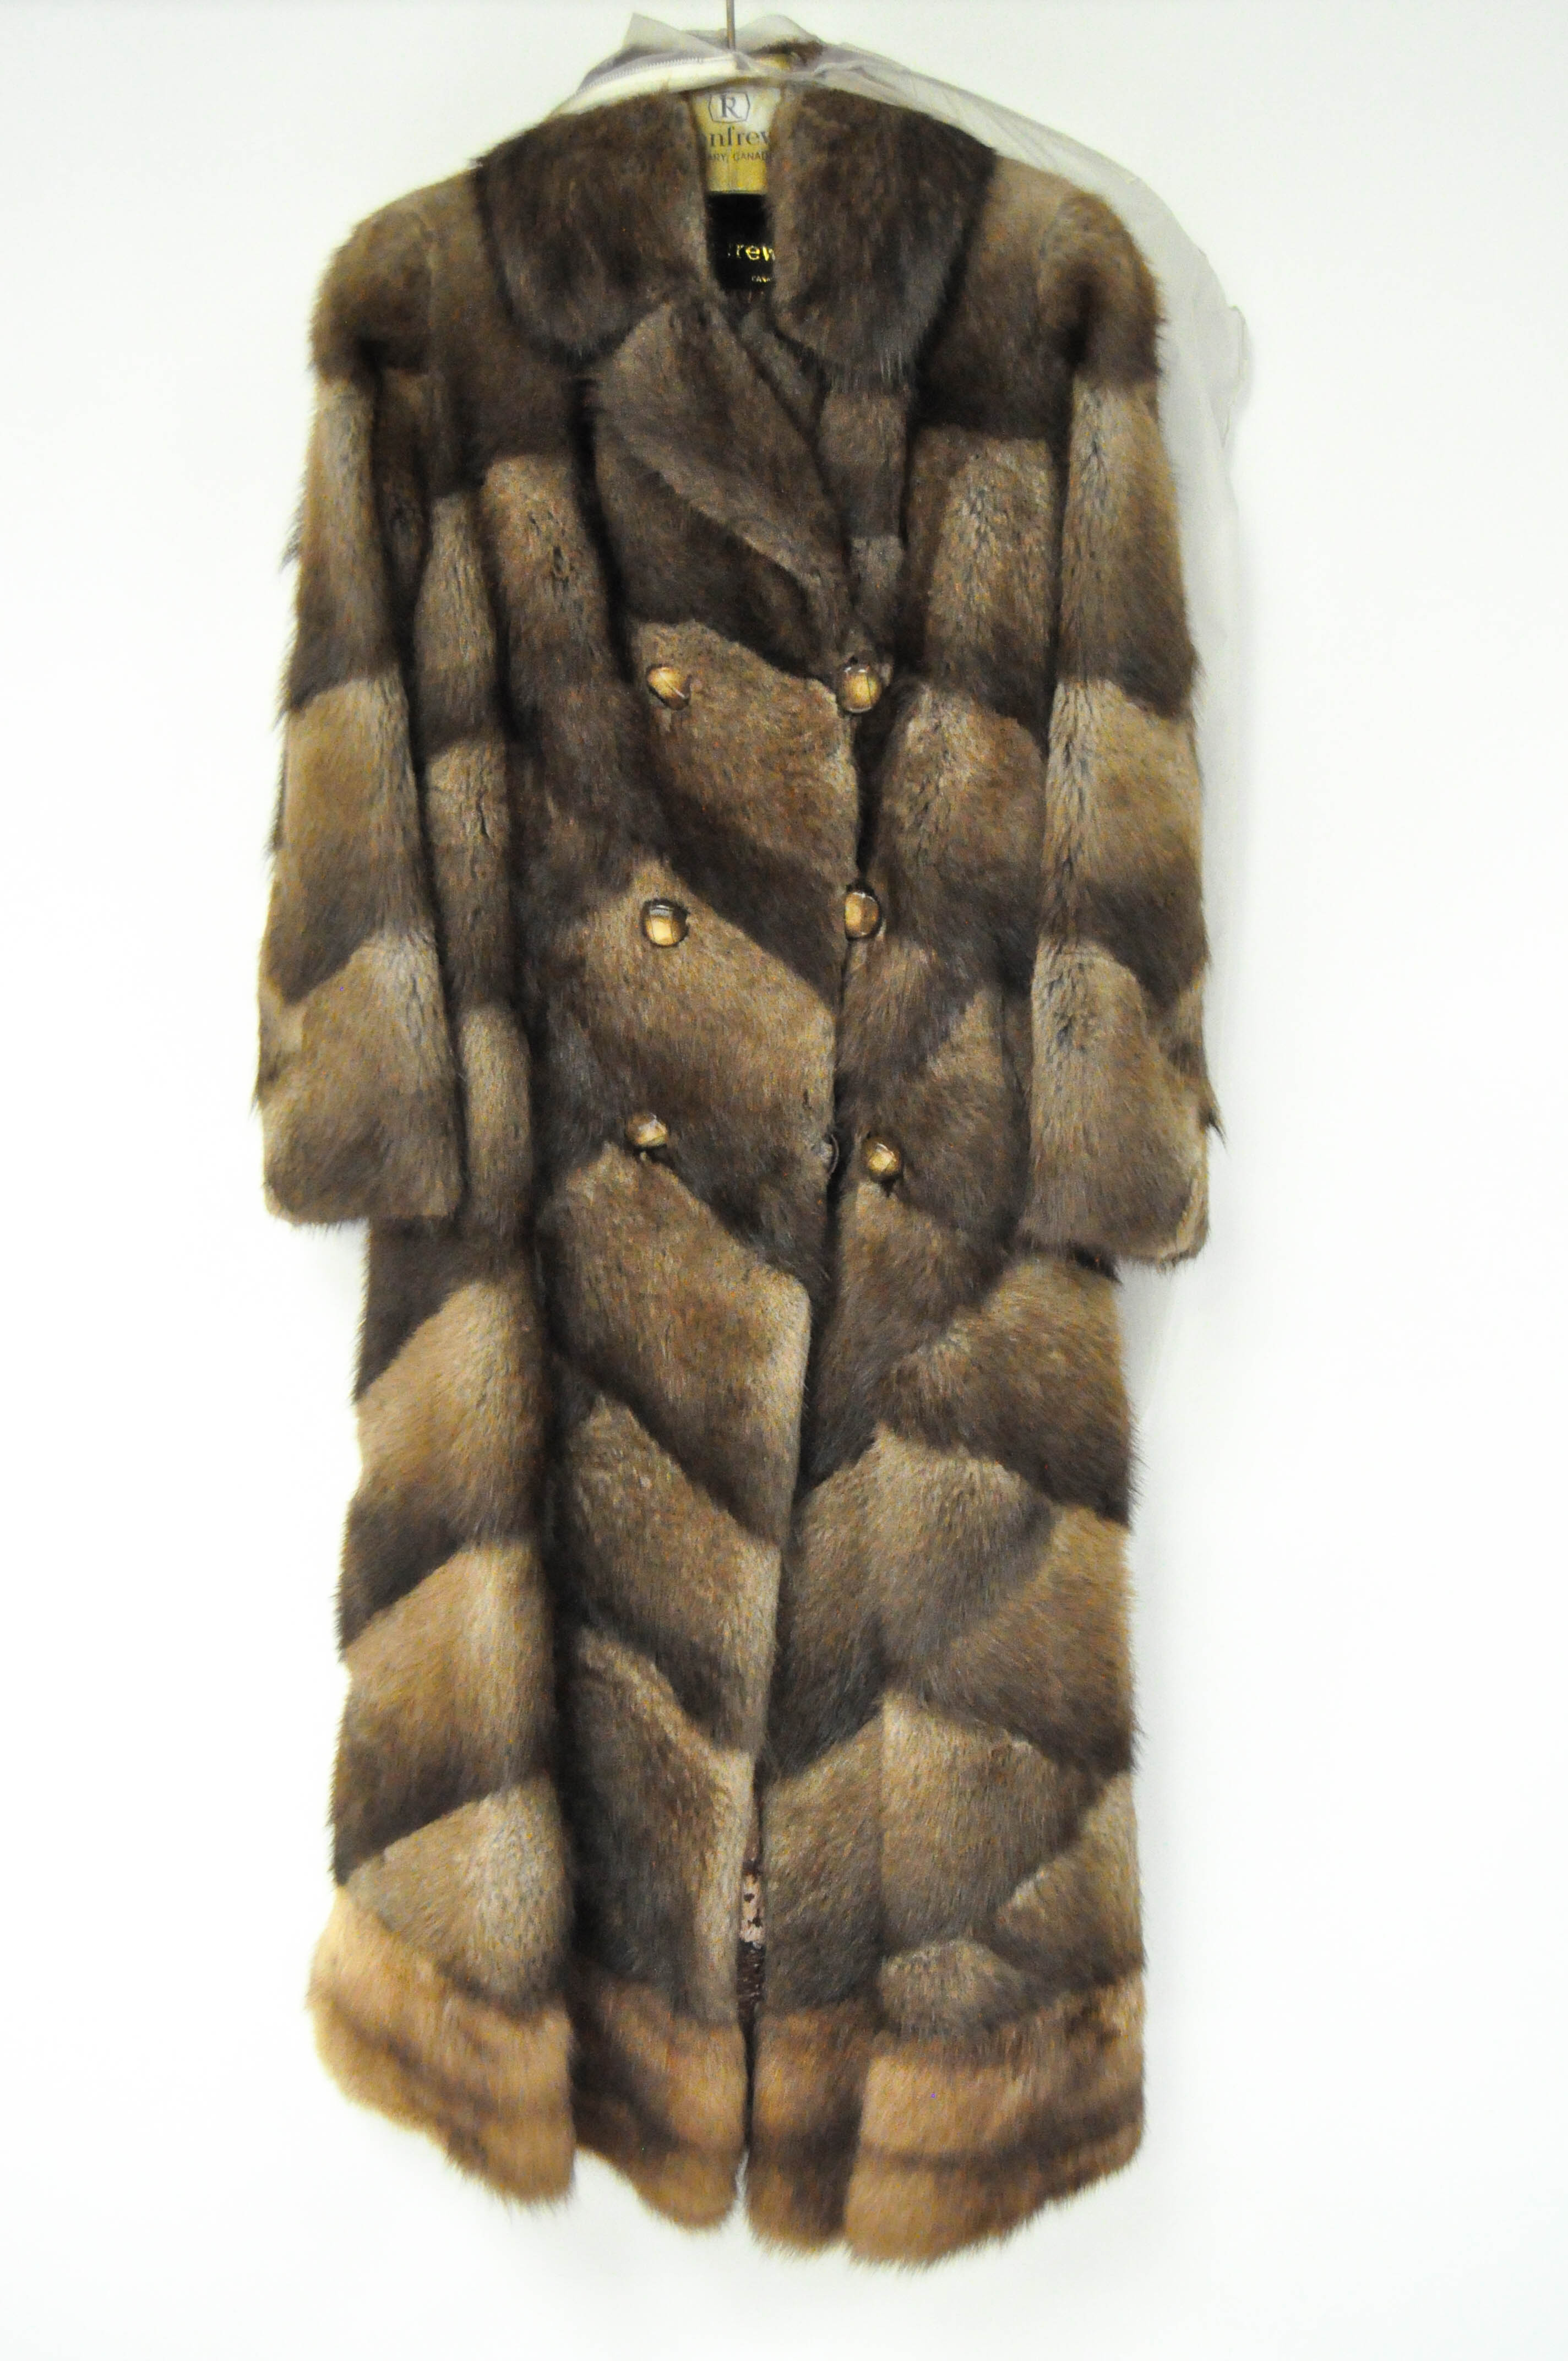 A vintage Canadian fur coat by Renfrew,